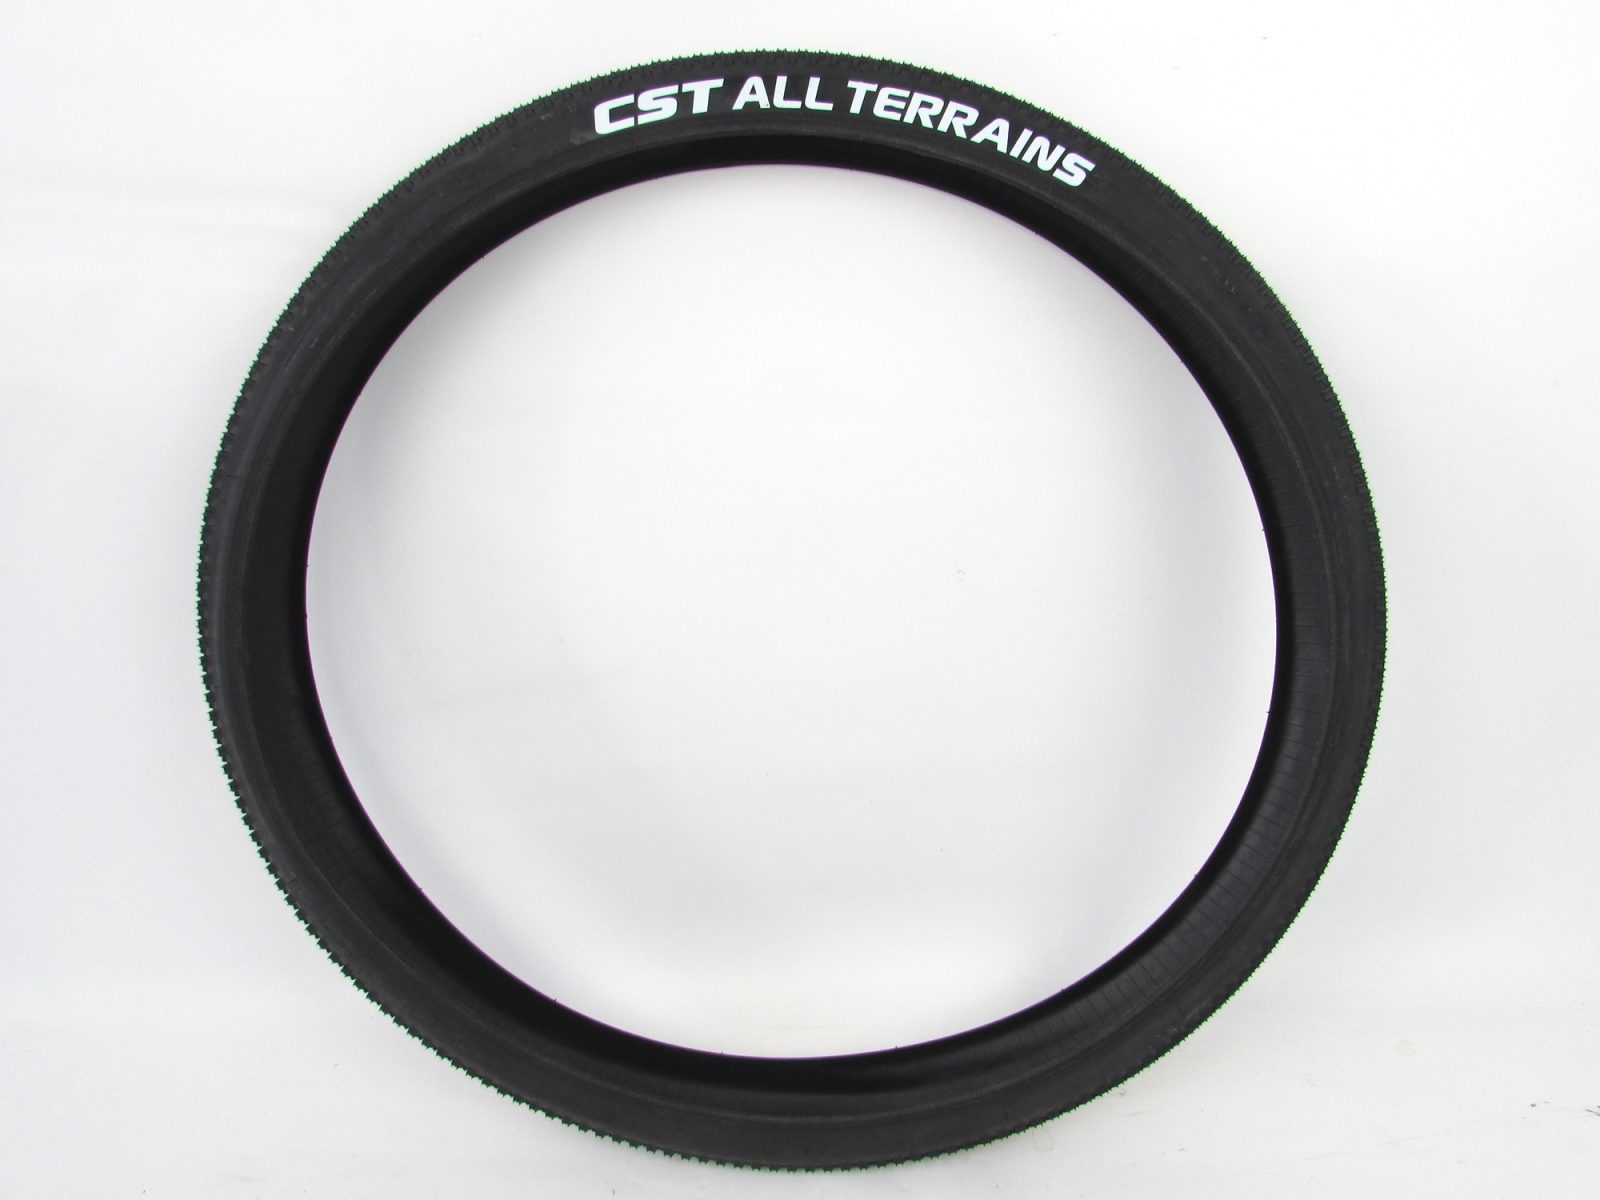 Покрышка CST All Terrains C-1820 54-622 (29×2.10 / 700×54C)